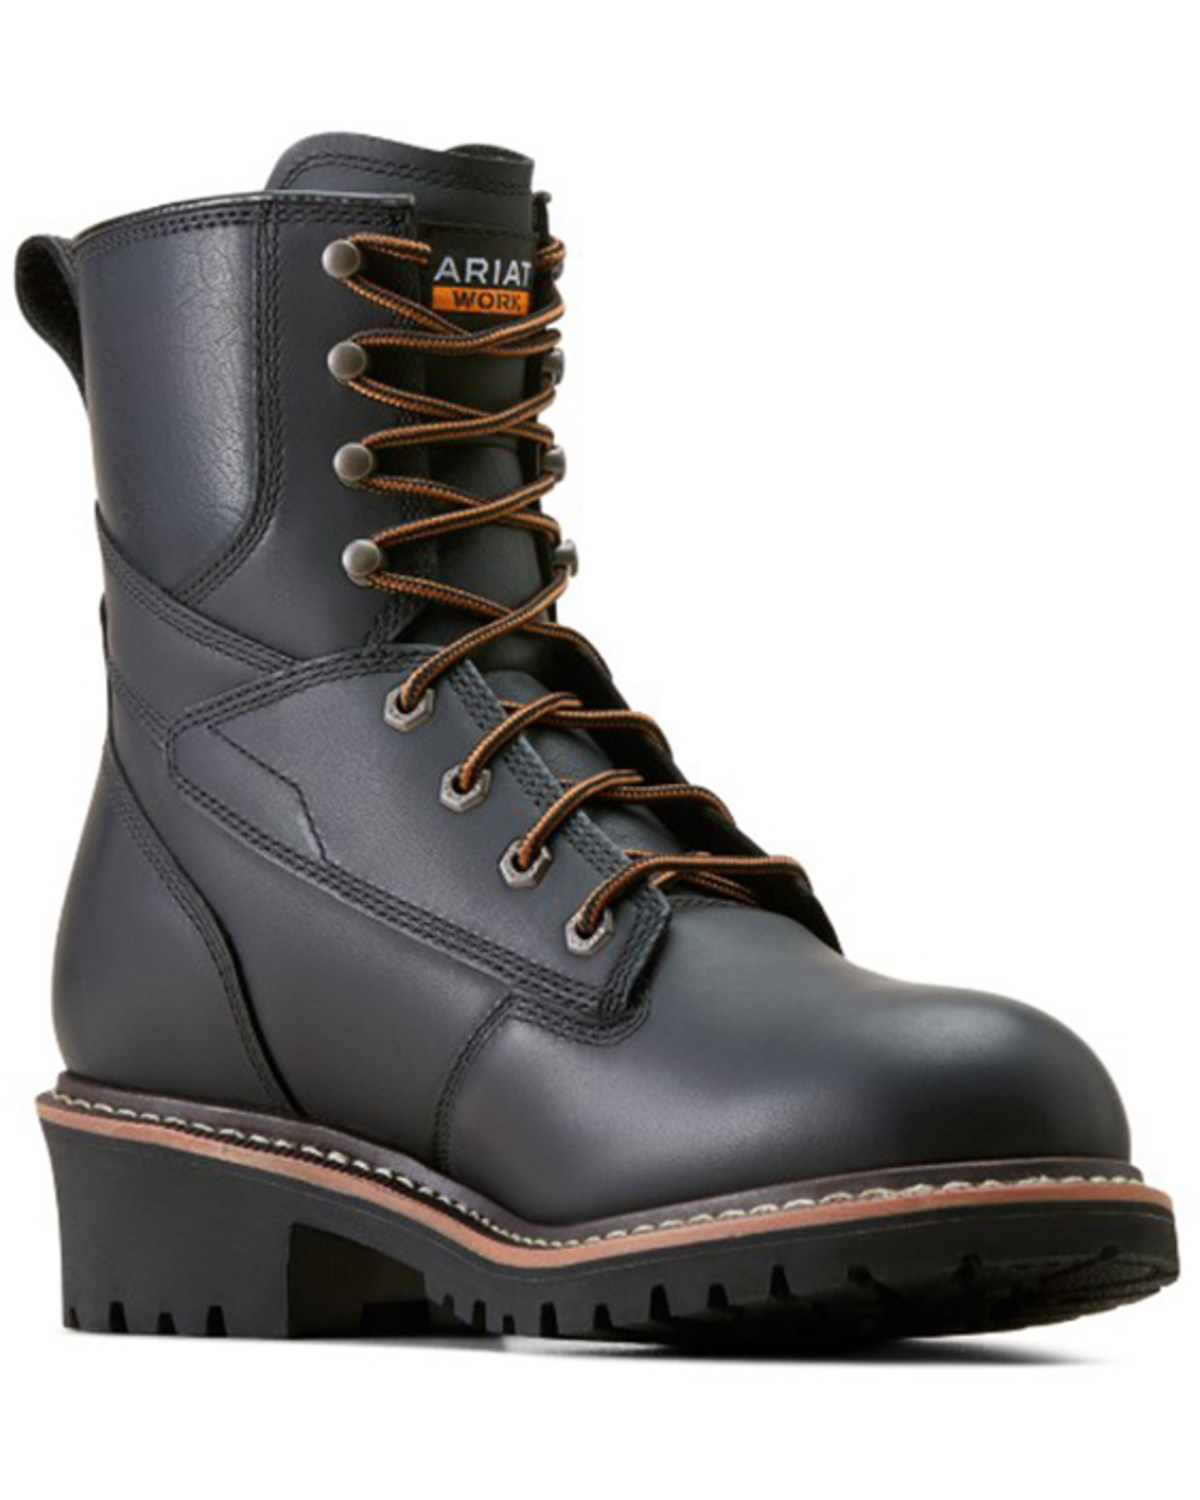 Ariat Men's 8" Logger Shock Shield Waterproof Work Boots - Soft Toe